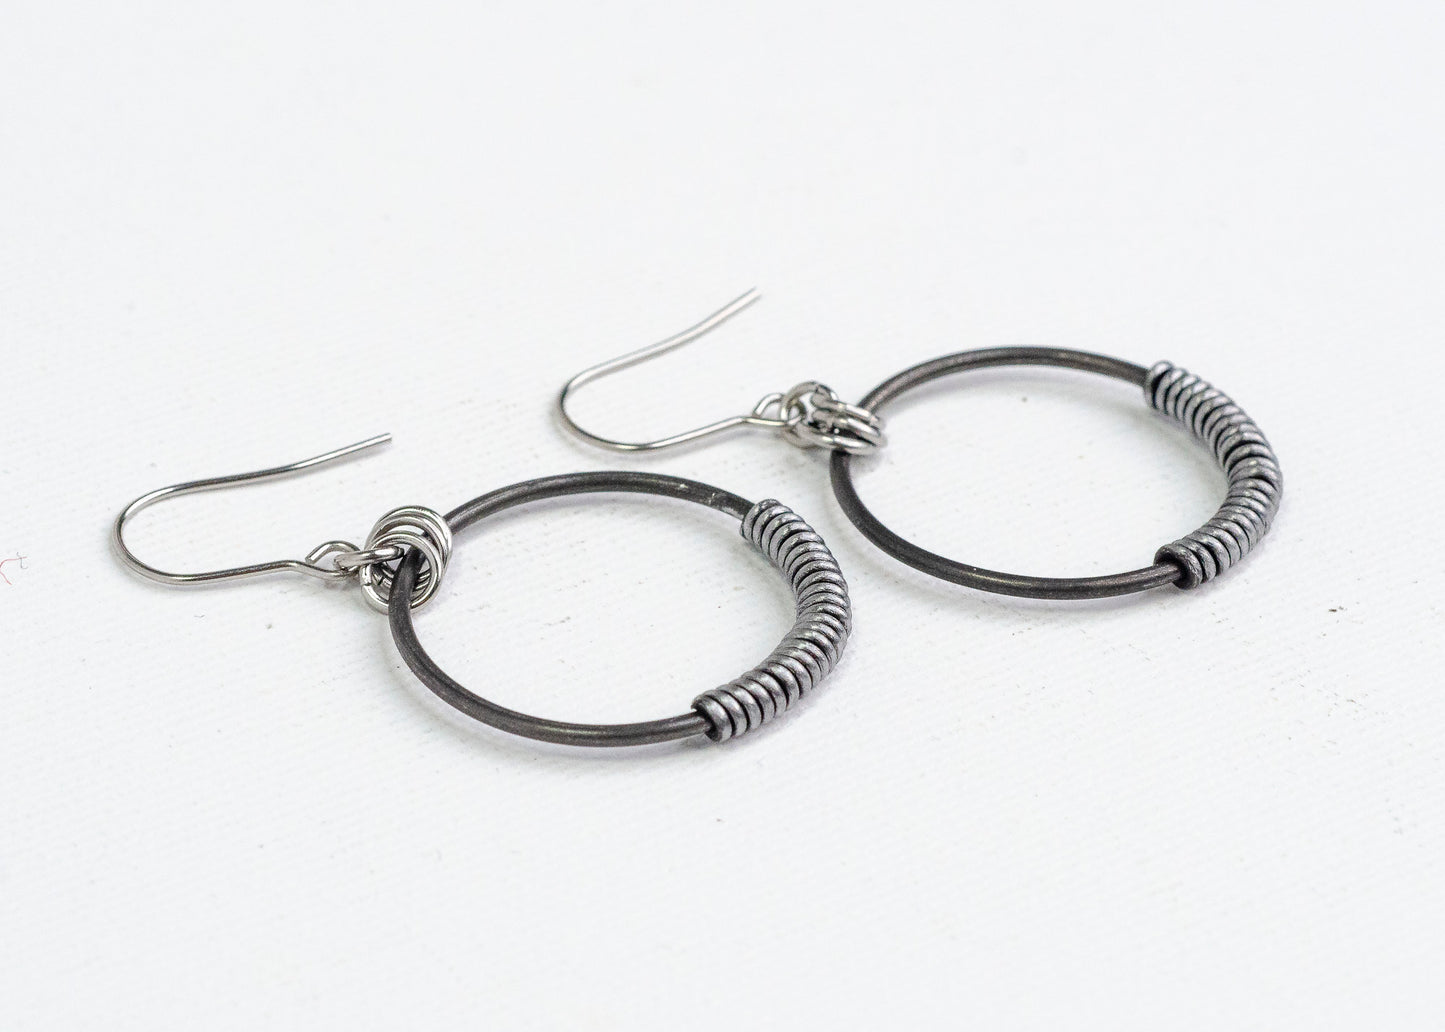 Mercury Concentric Earrings Steel Wrap